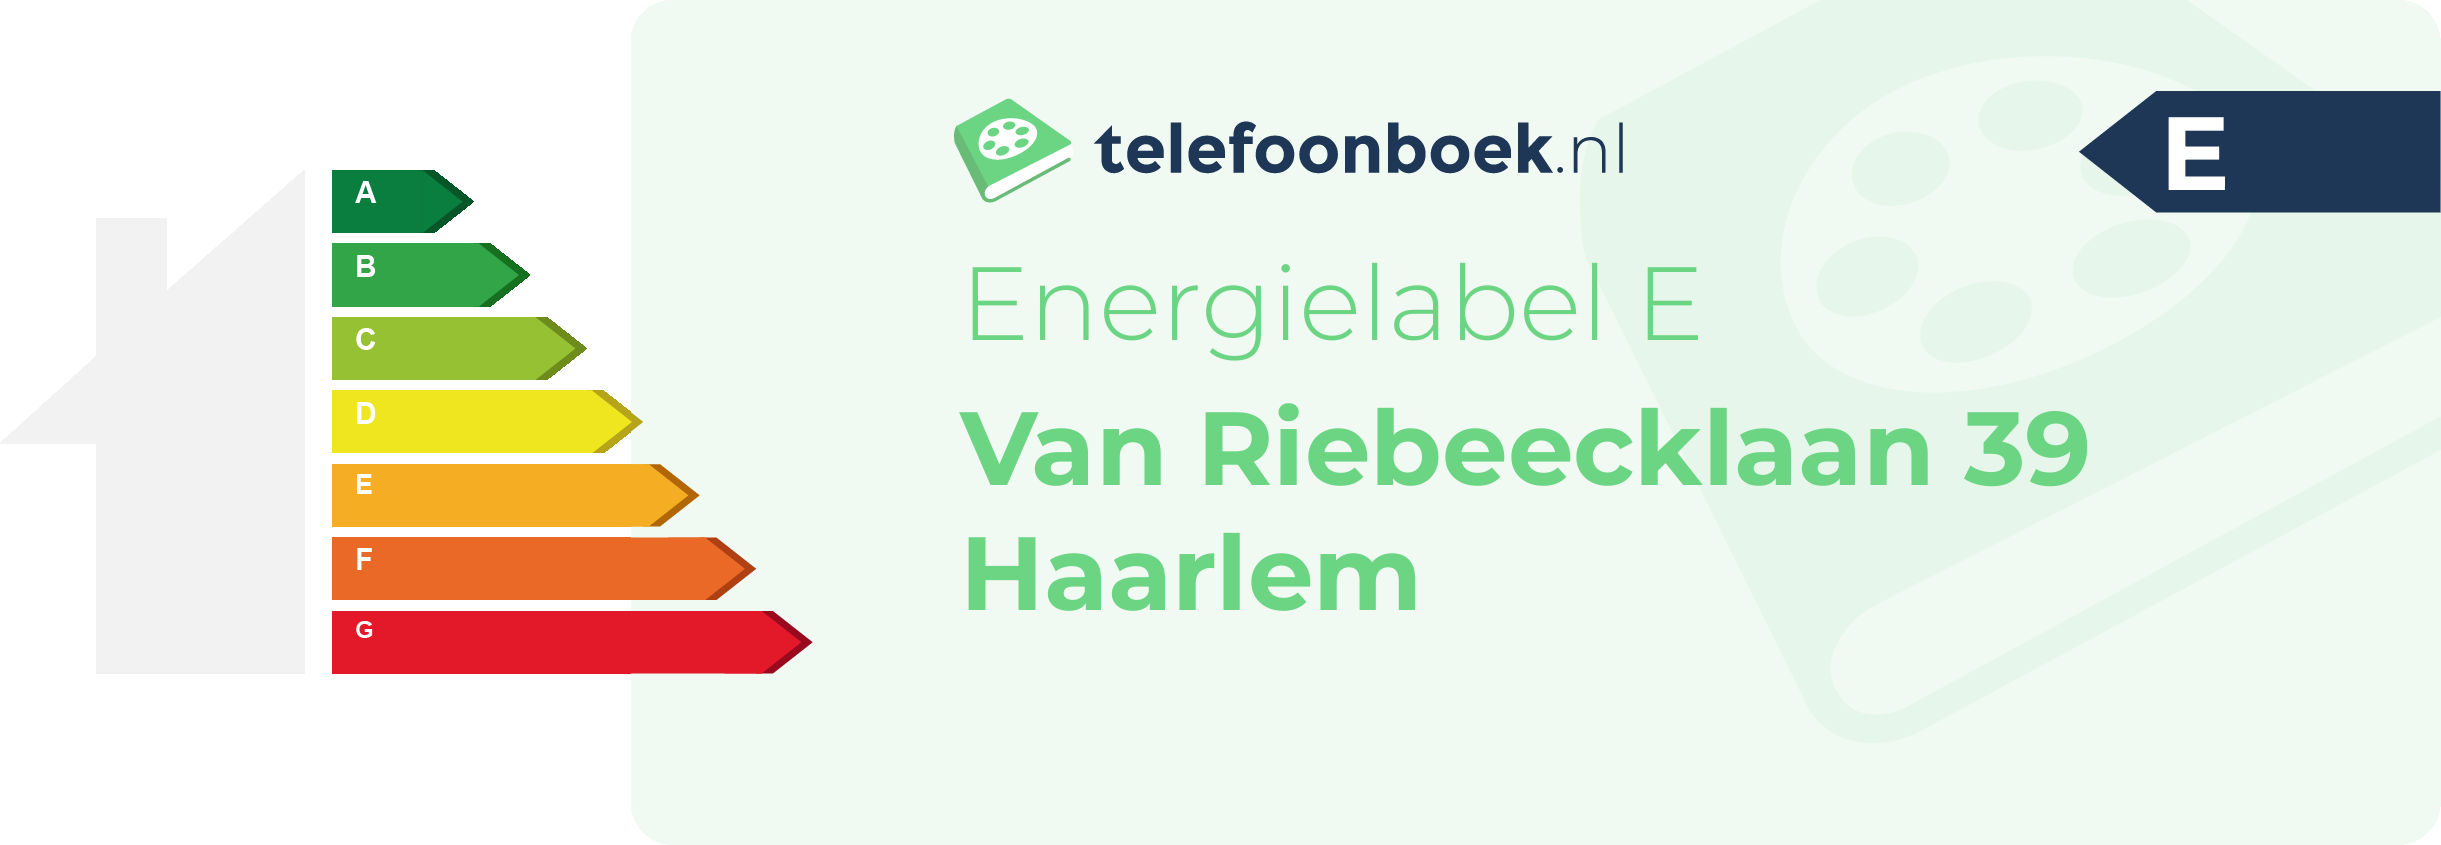 Energielabel Van Riebeecklaan 39 Haarlem